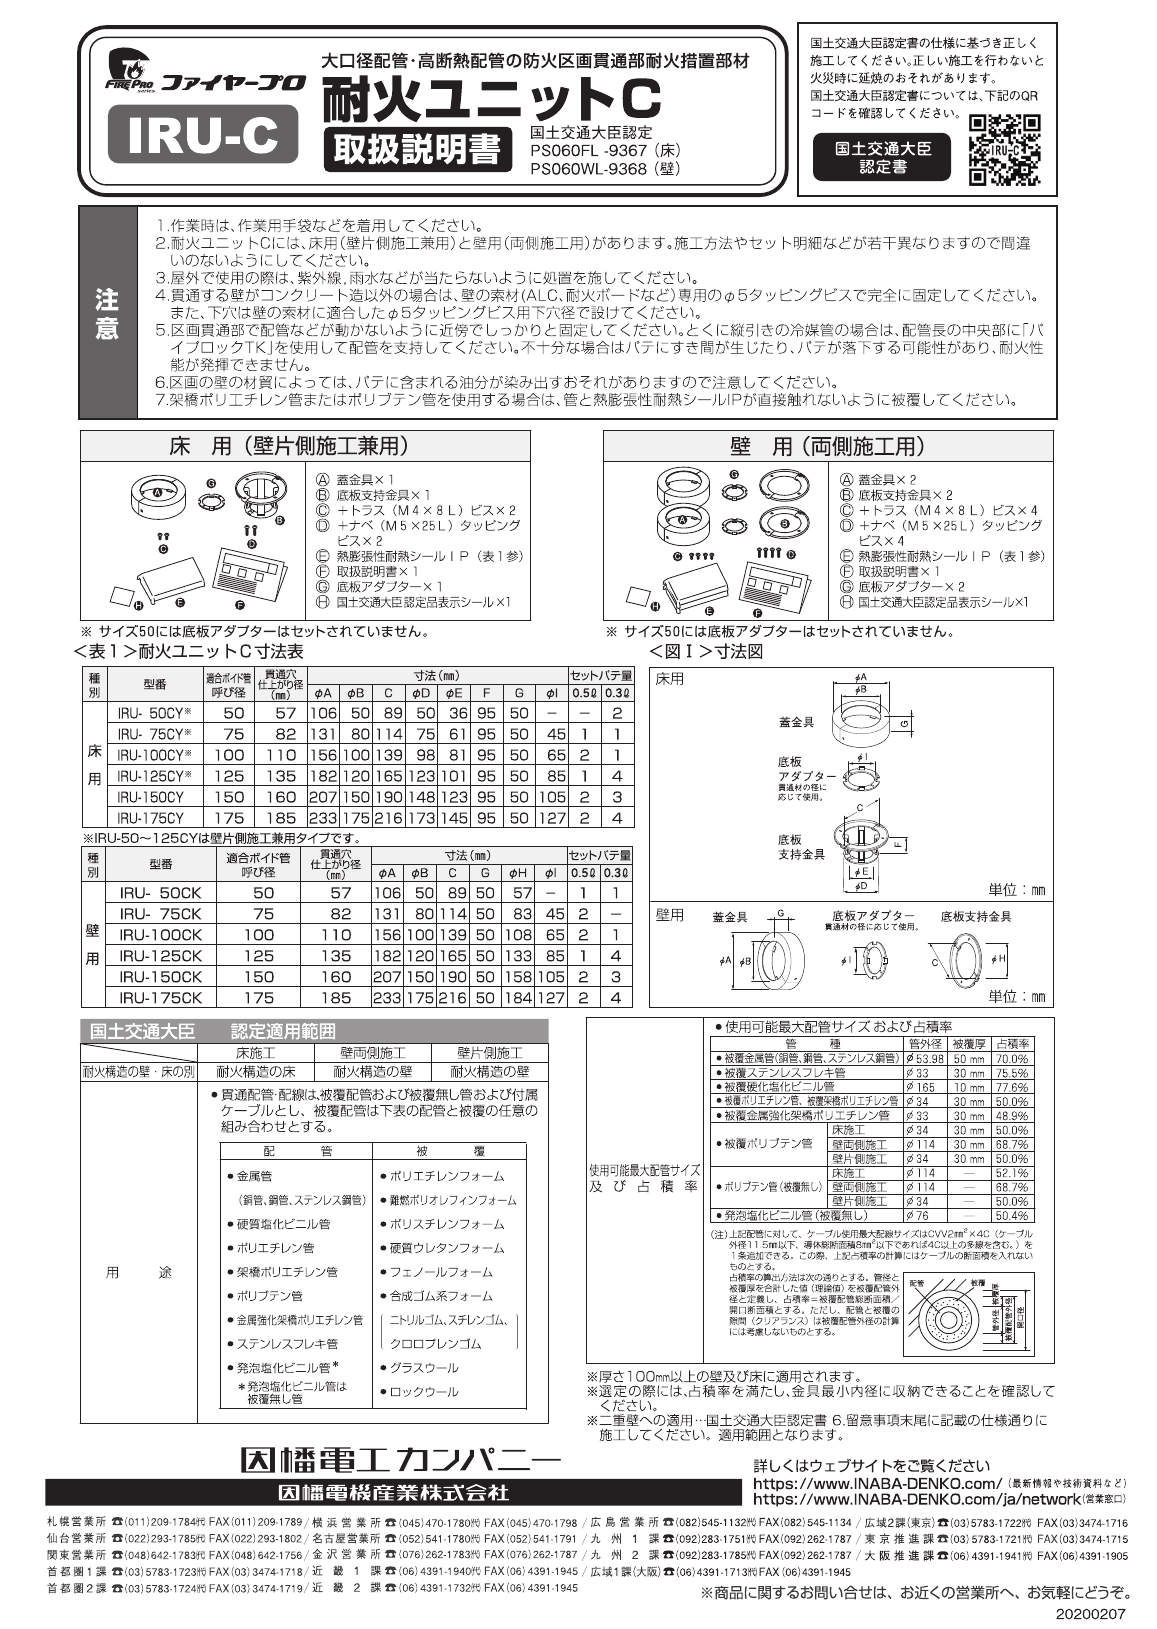 IRU-C_取扱説明書_20200207-00w.pdf